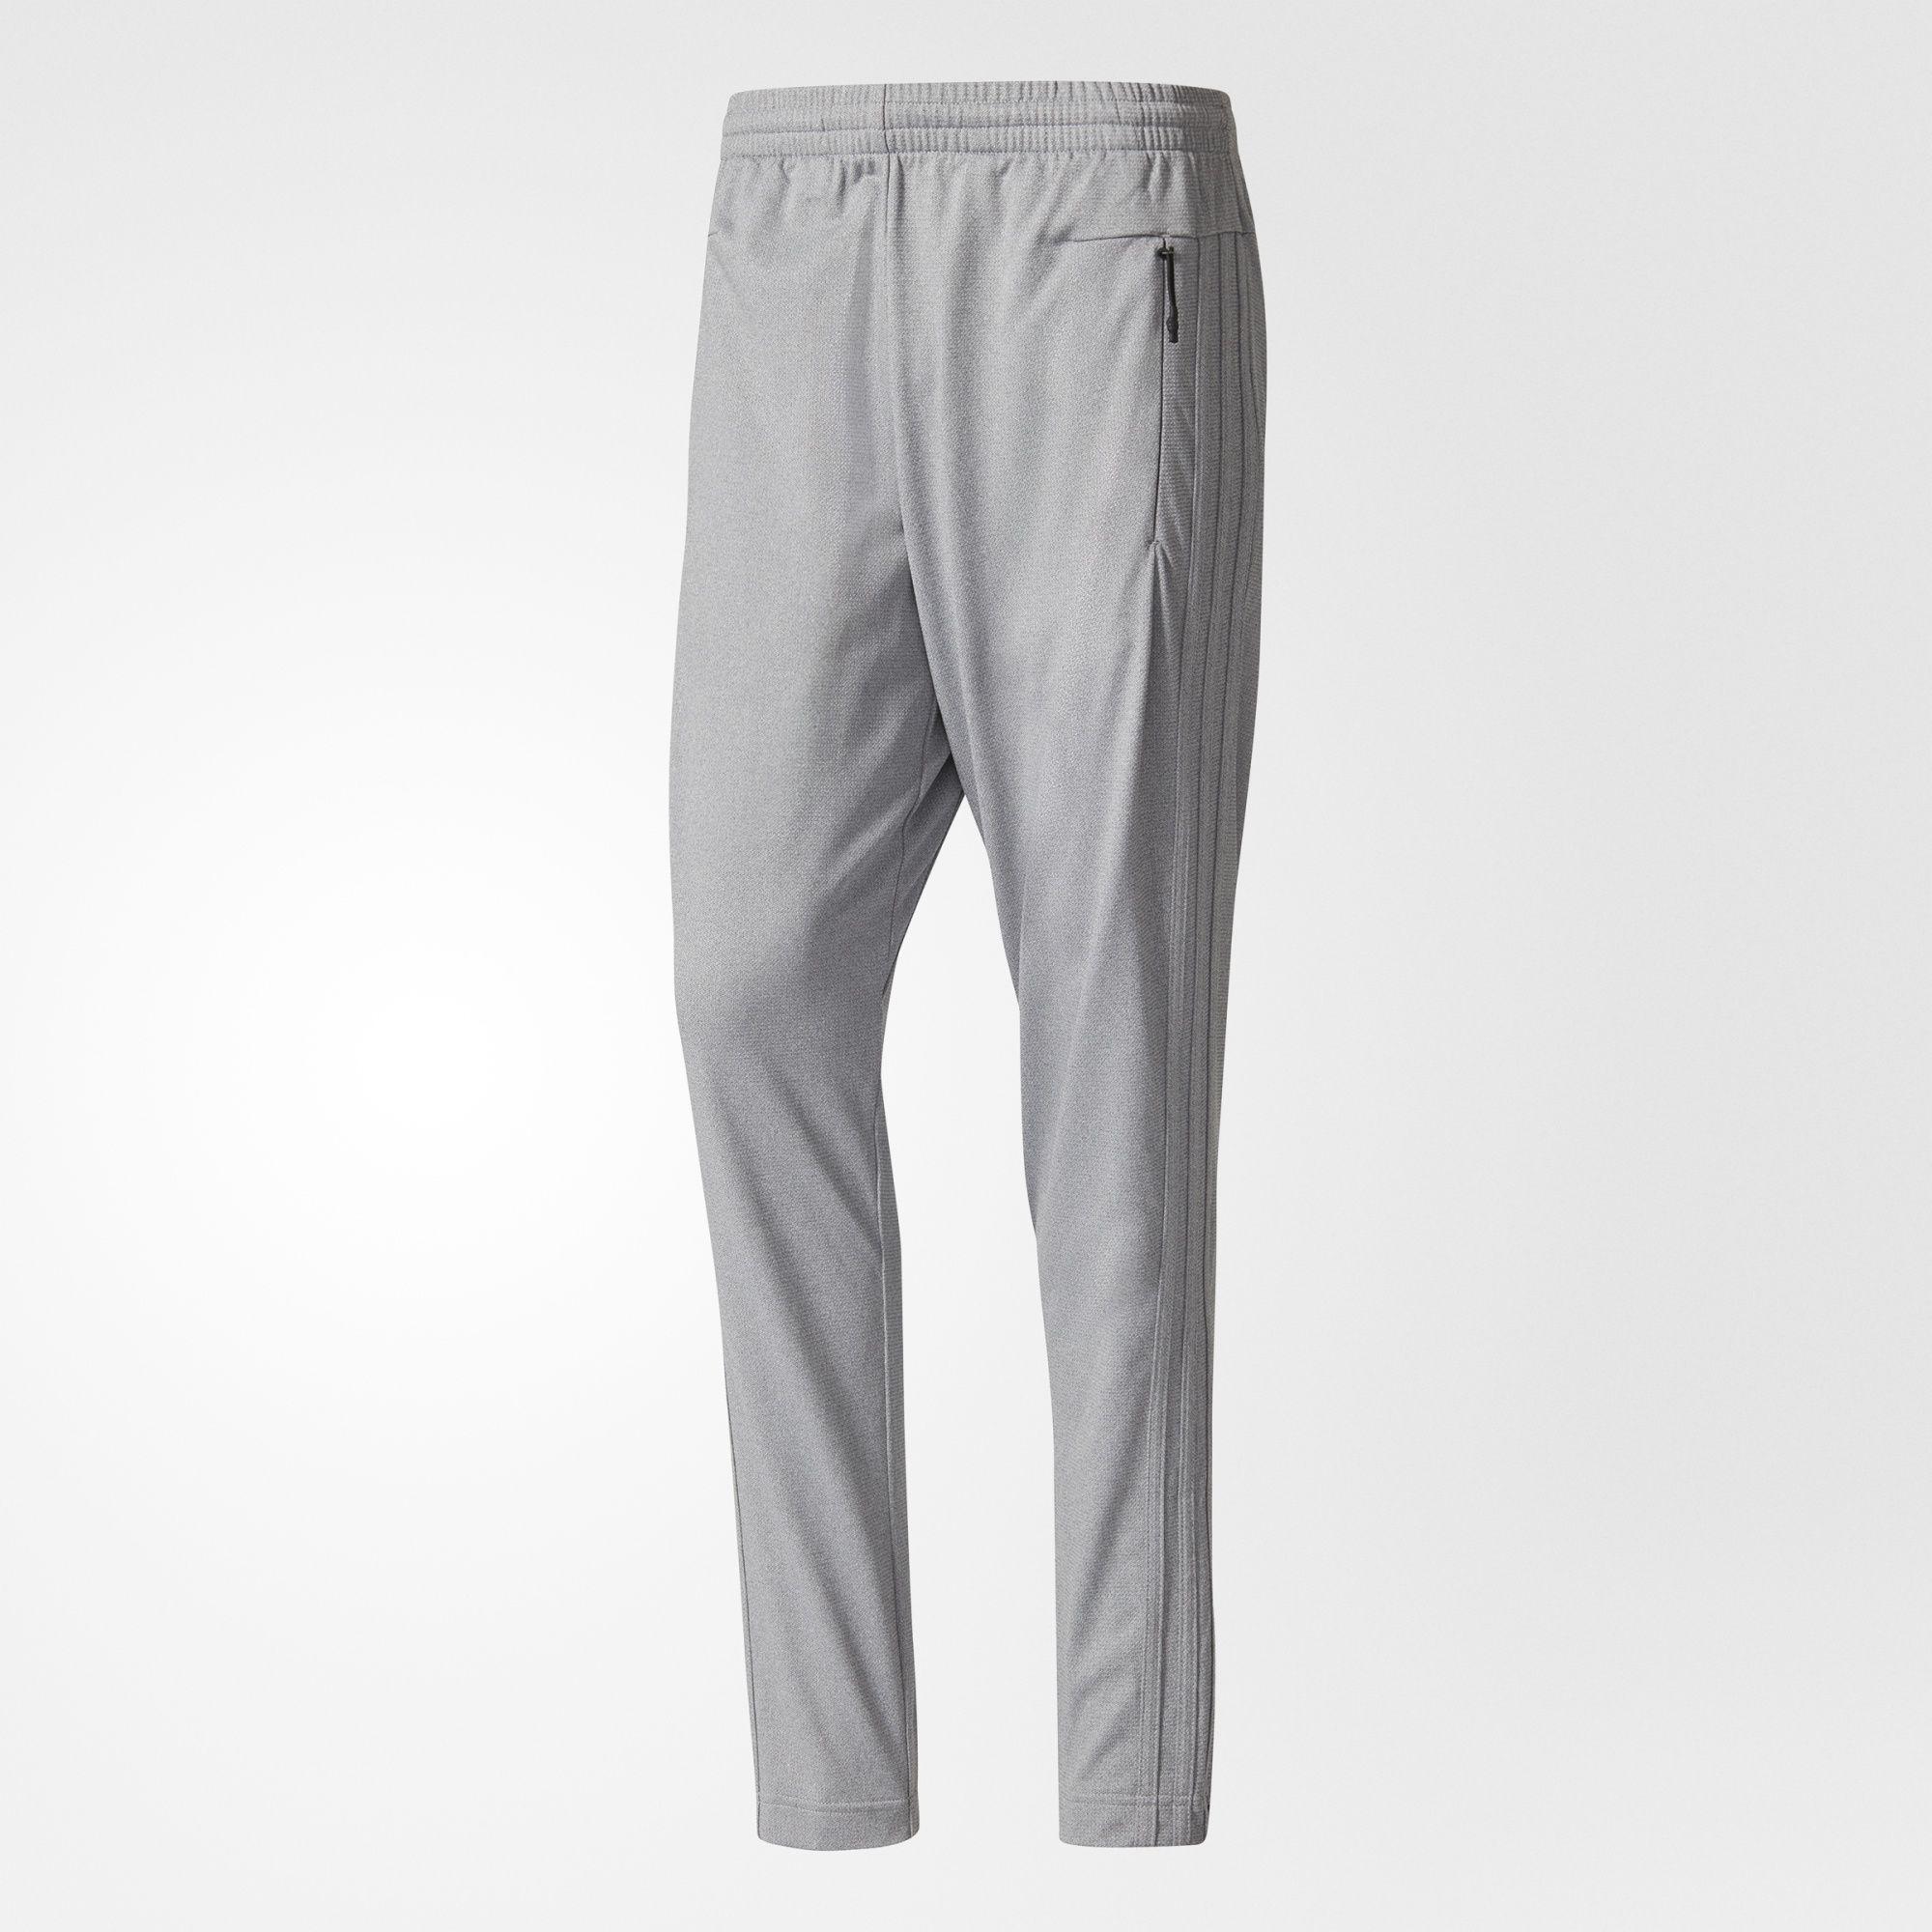 Adidas Mens ID Tiro Fuerte Pants - Grey - Tennisnuts.com